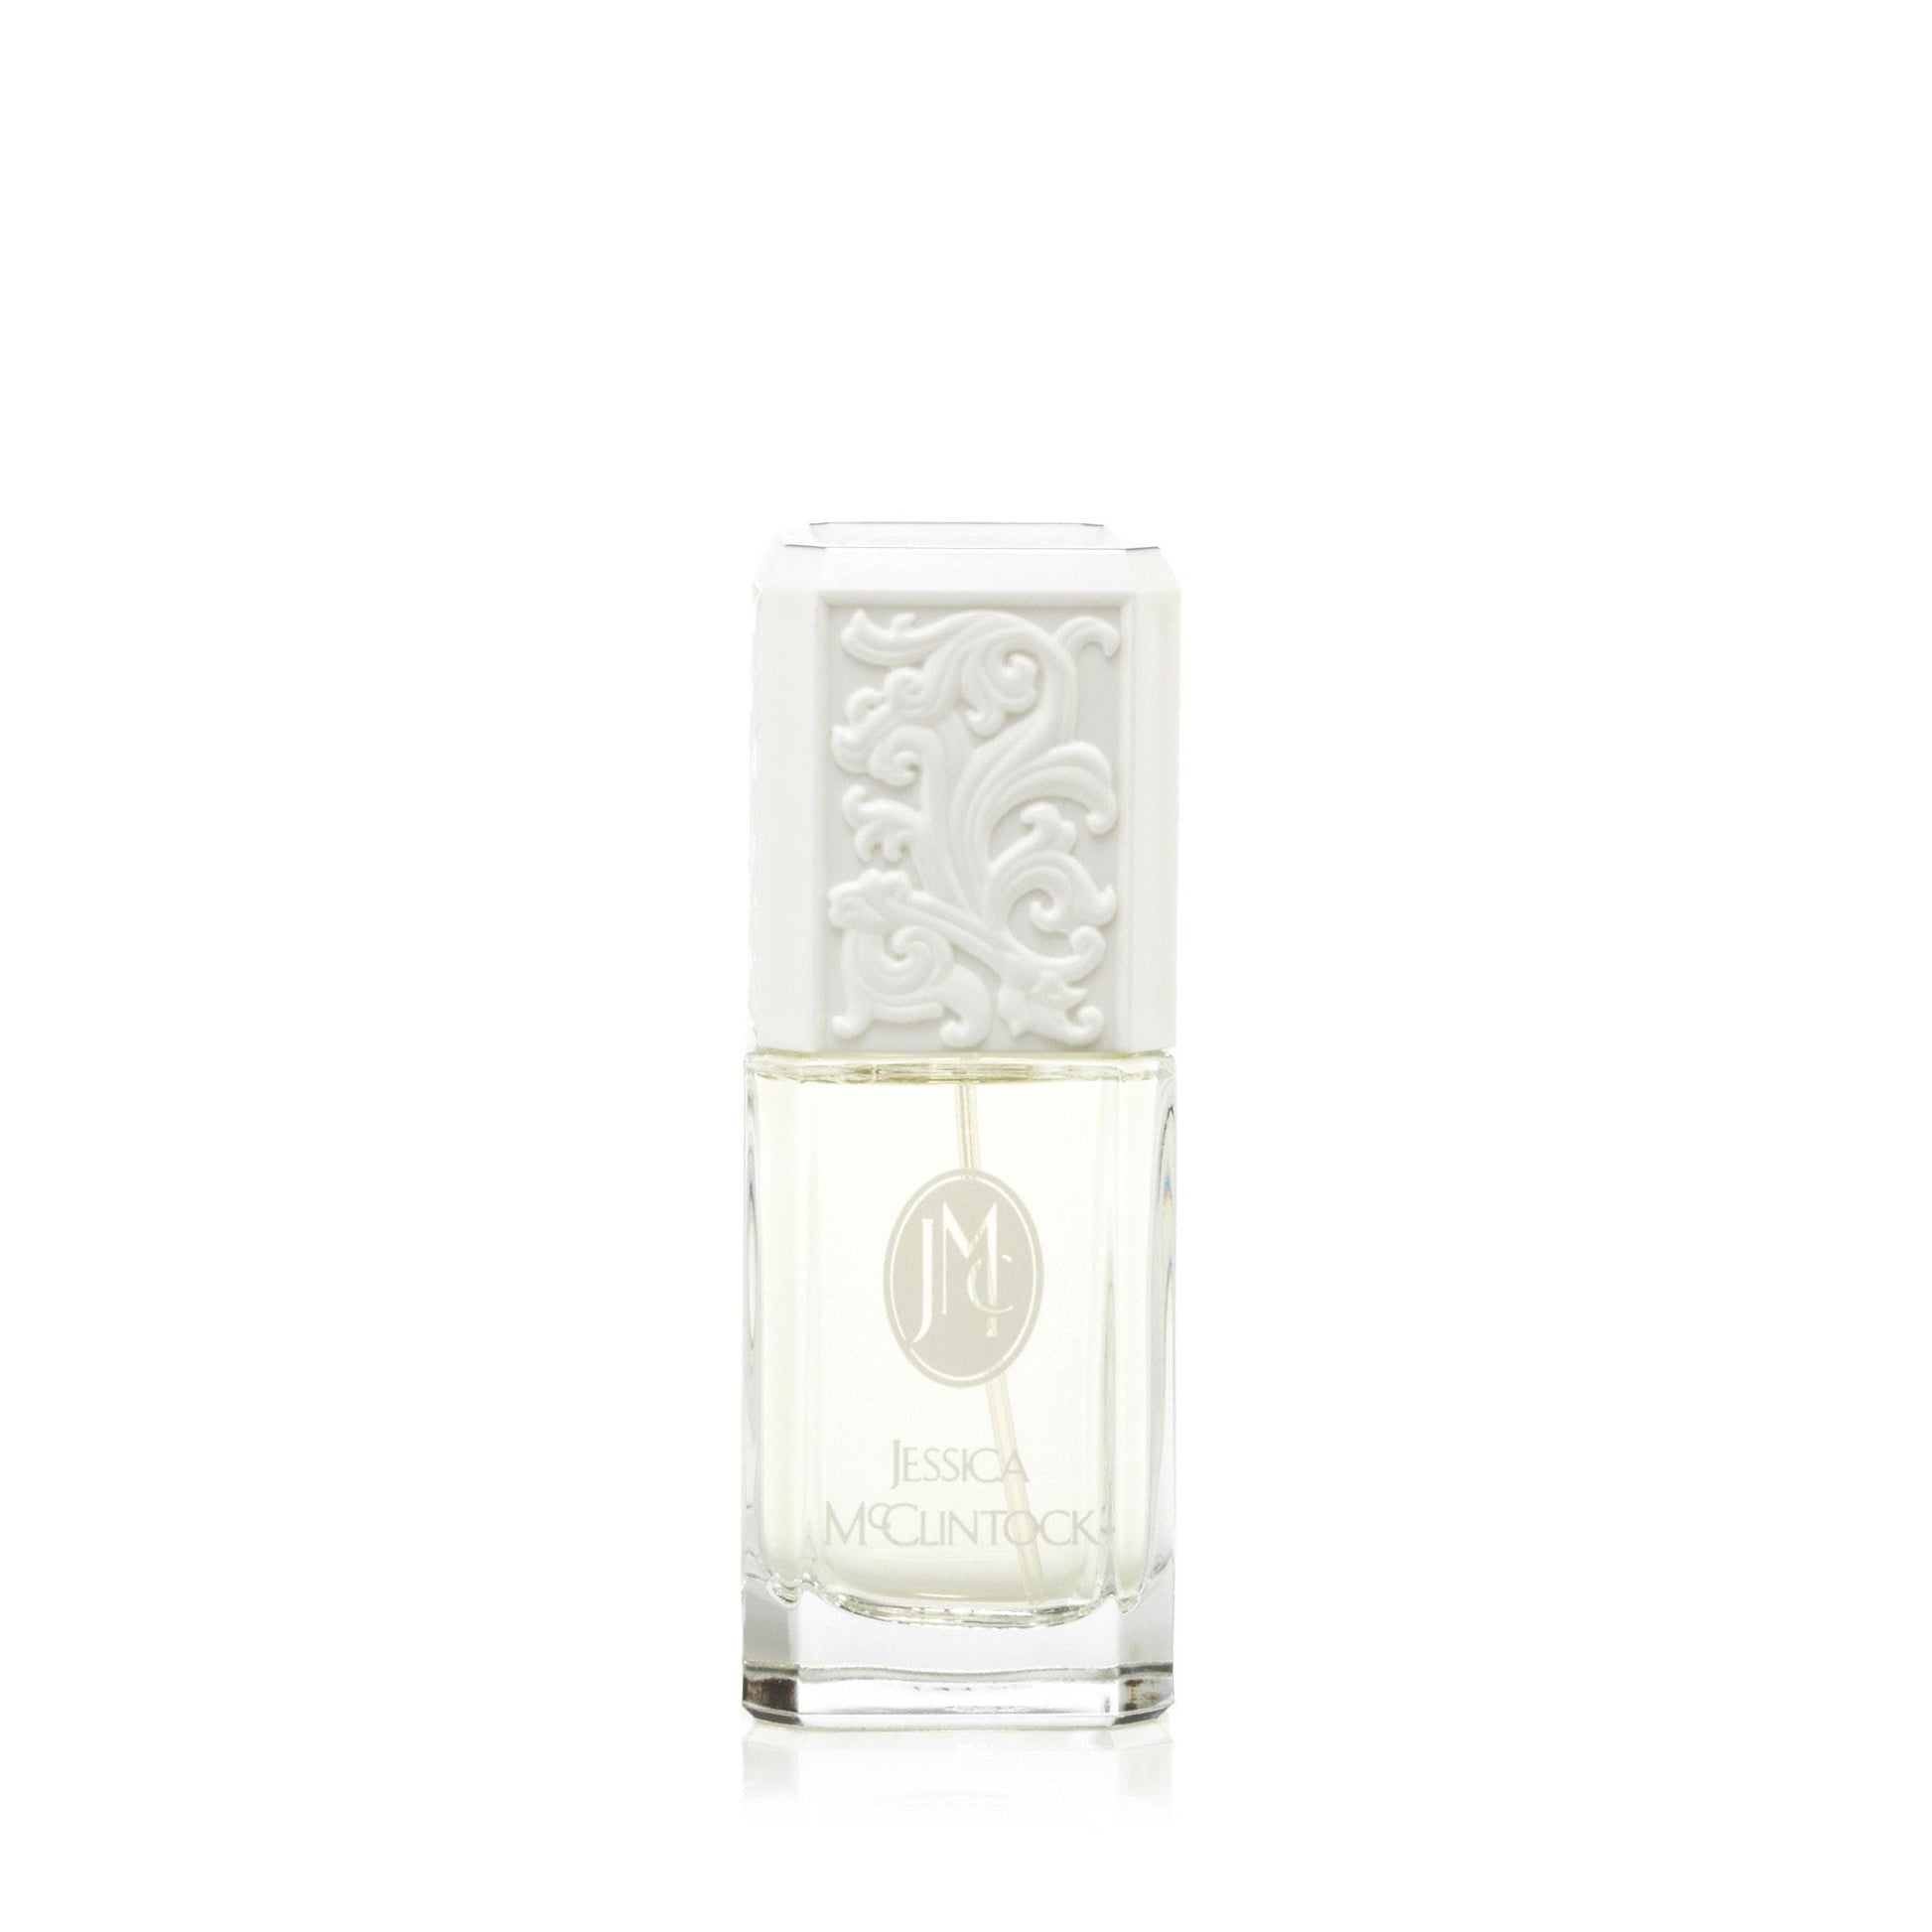 Jessica Mcclintock Eau de Parfum Spray for Women by Jessica McClintock, Product image 2